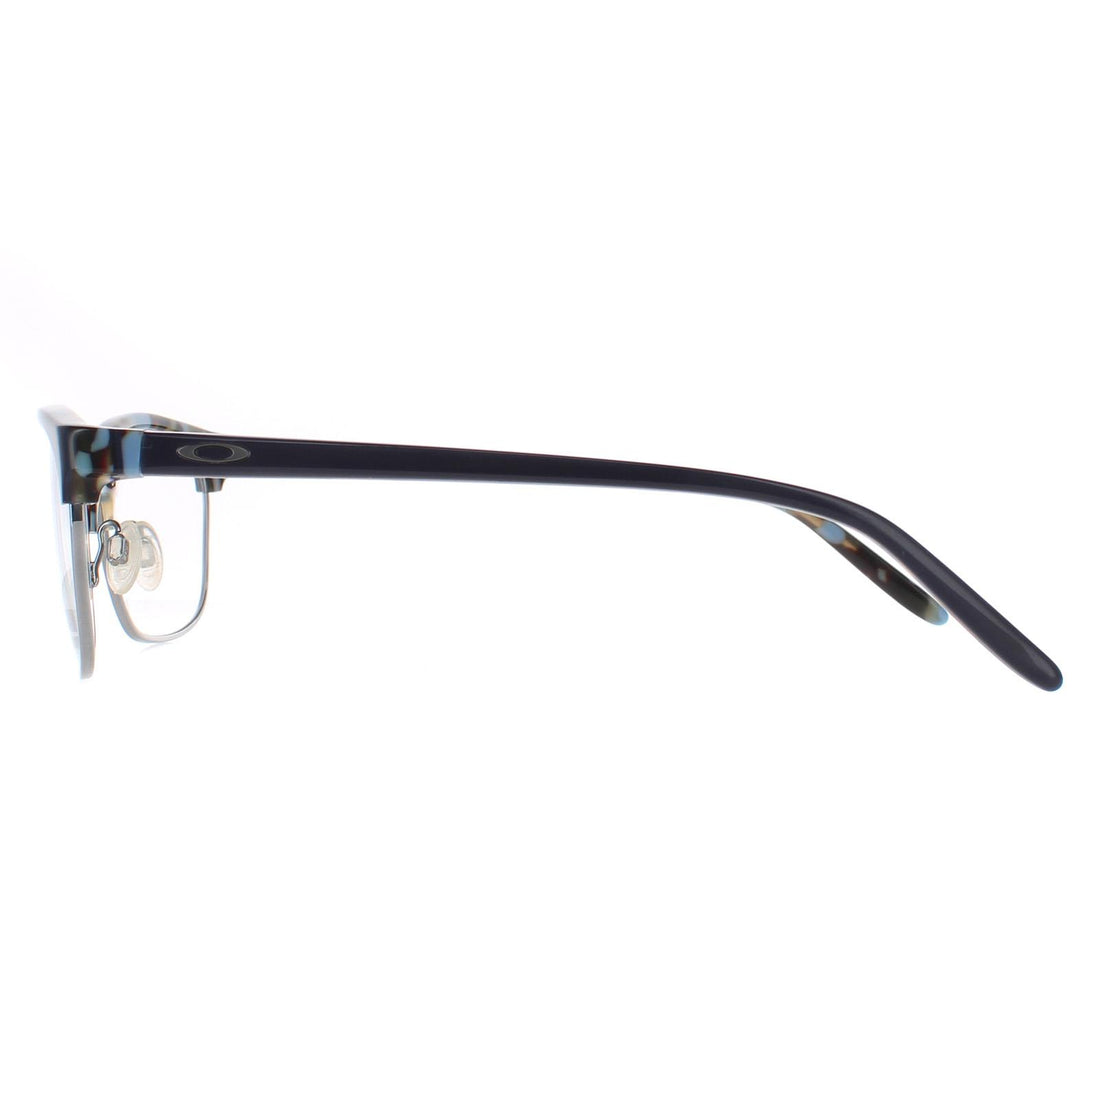 Oakley Ponder Glasses Frames